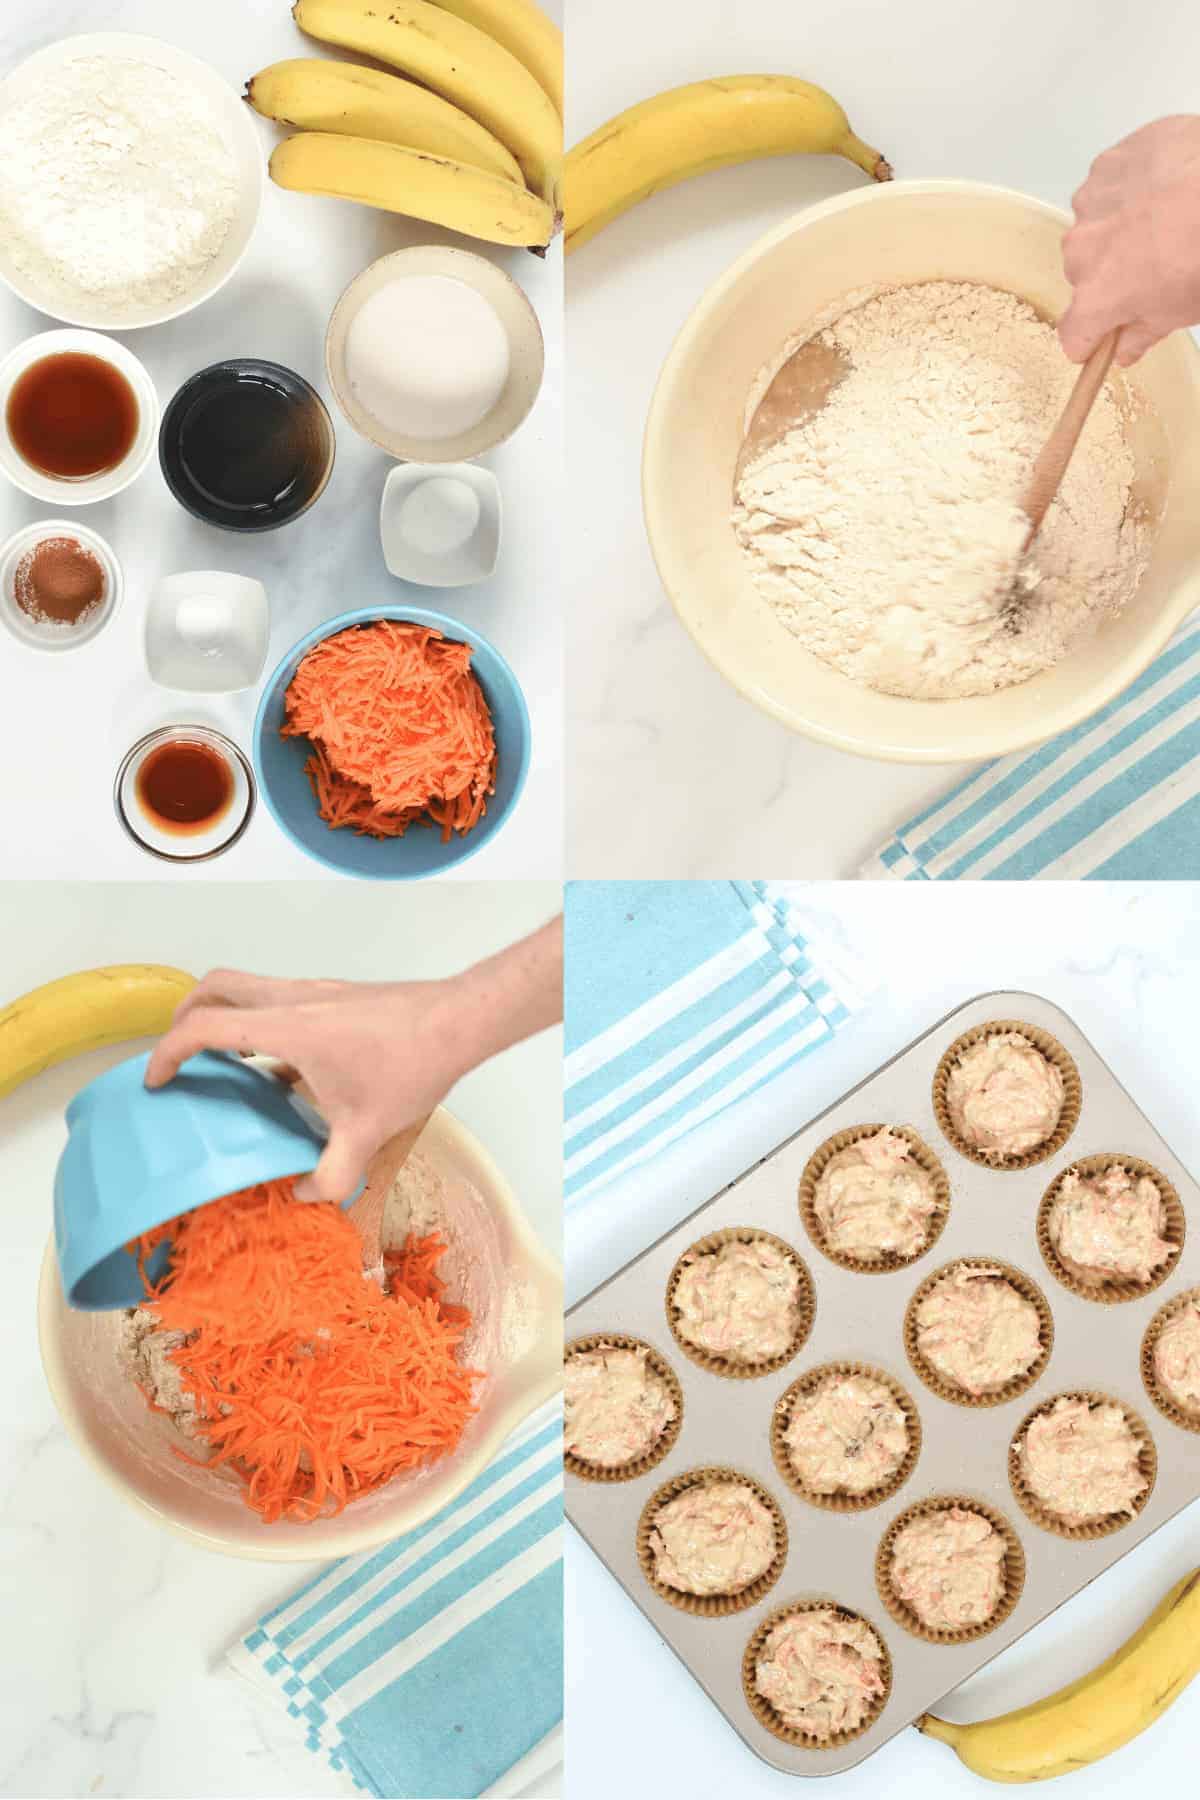 How to make Banana Carrot Muffins